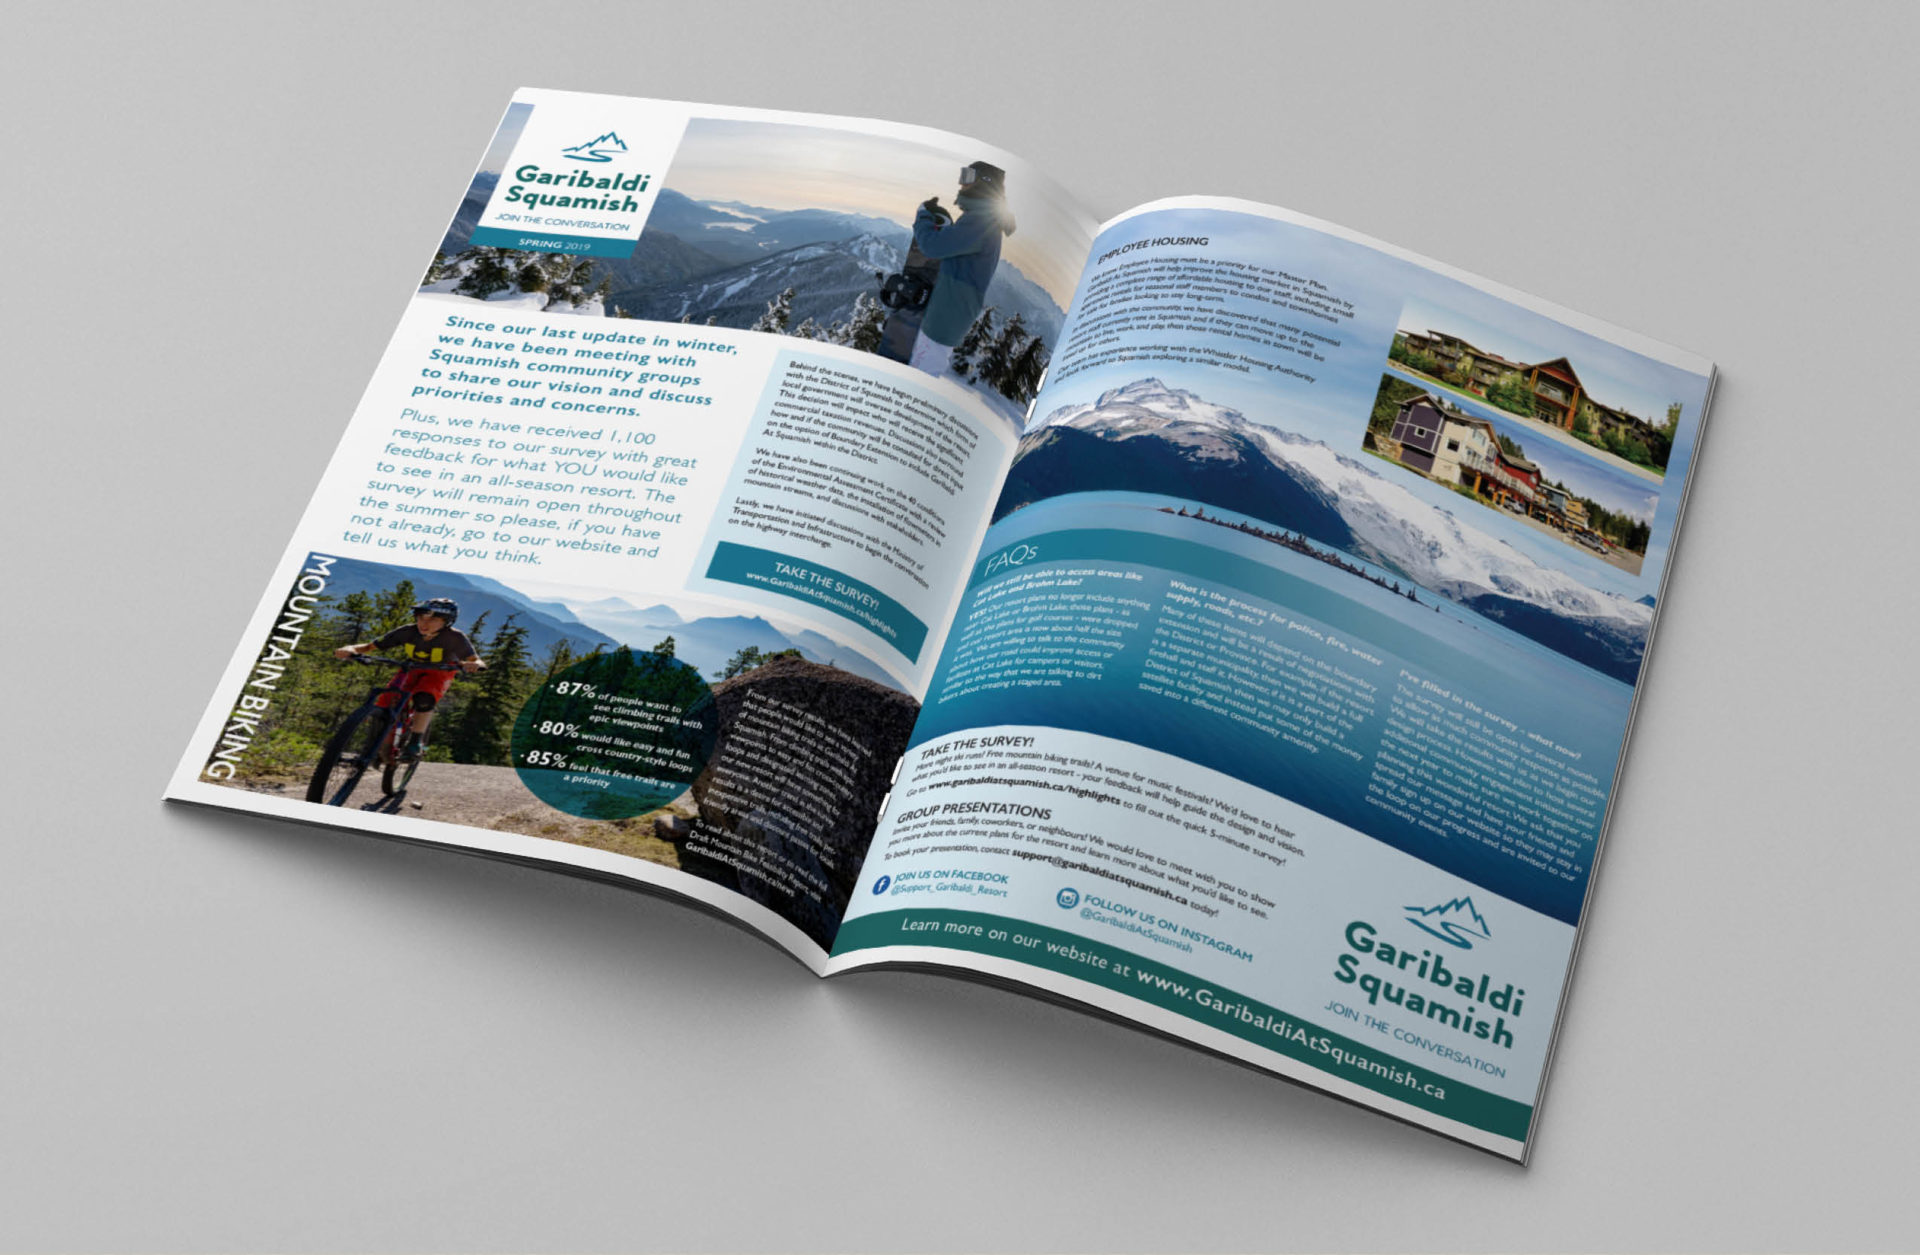 Garabaldi Squamish magazine spread layout and design